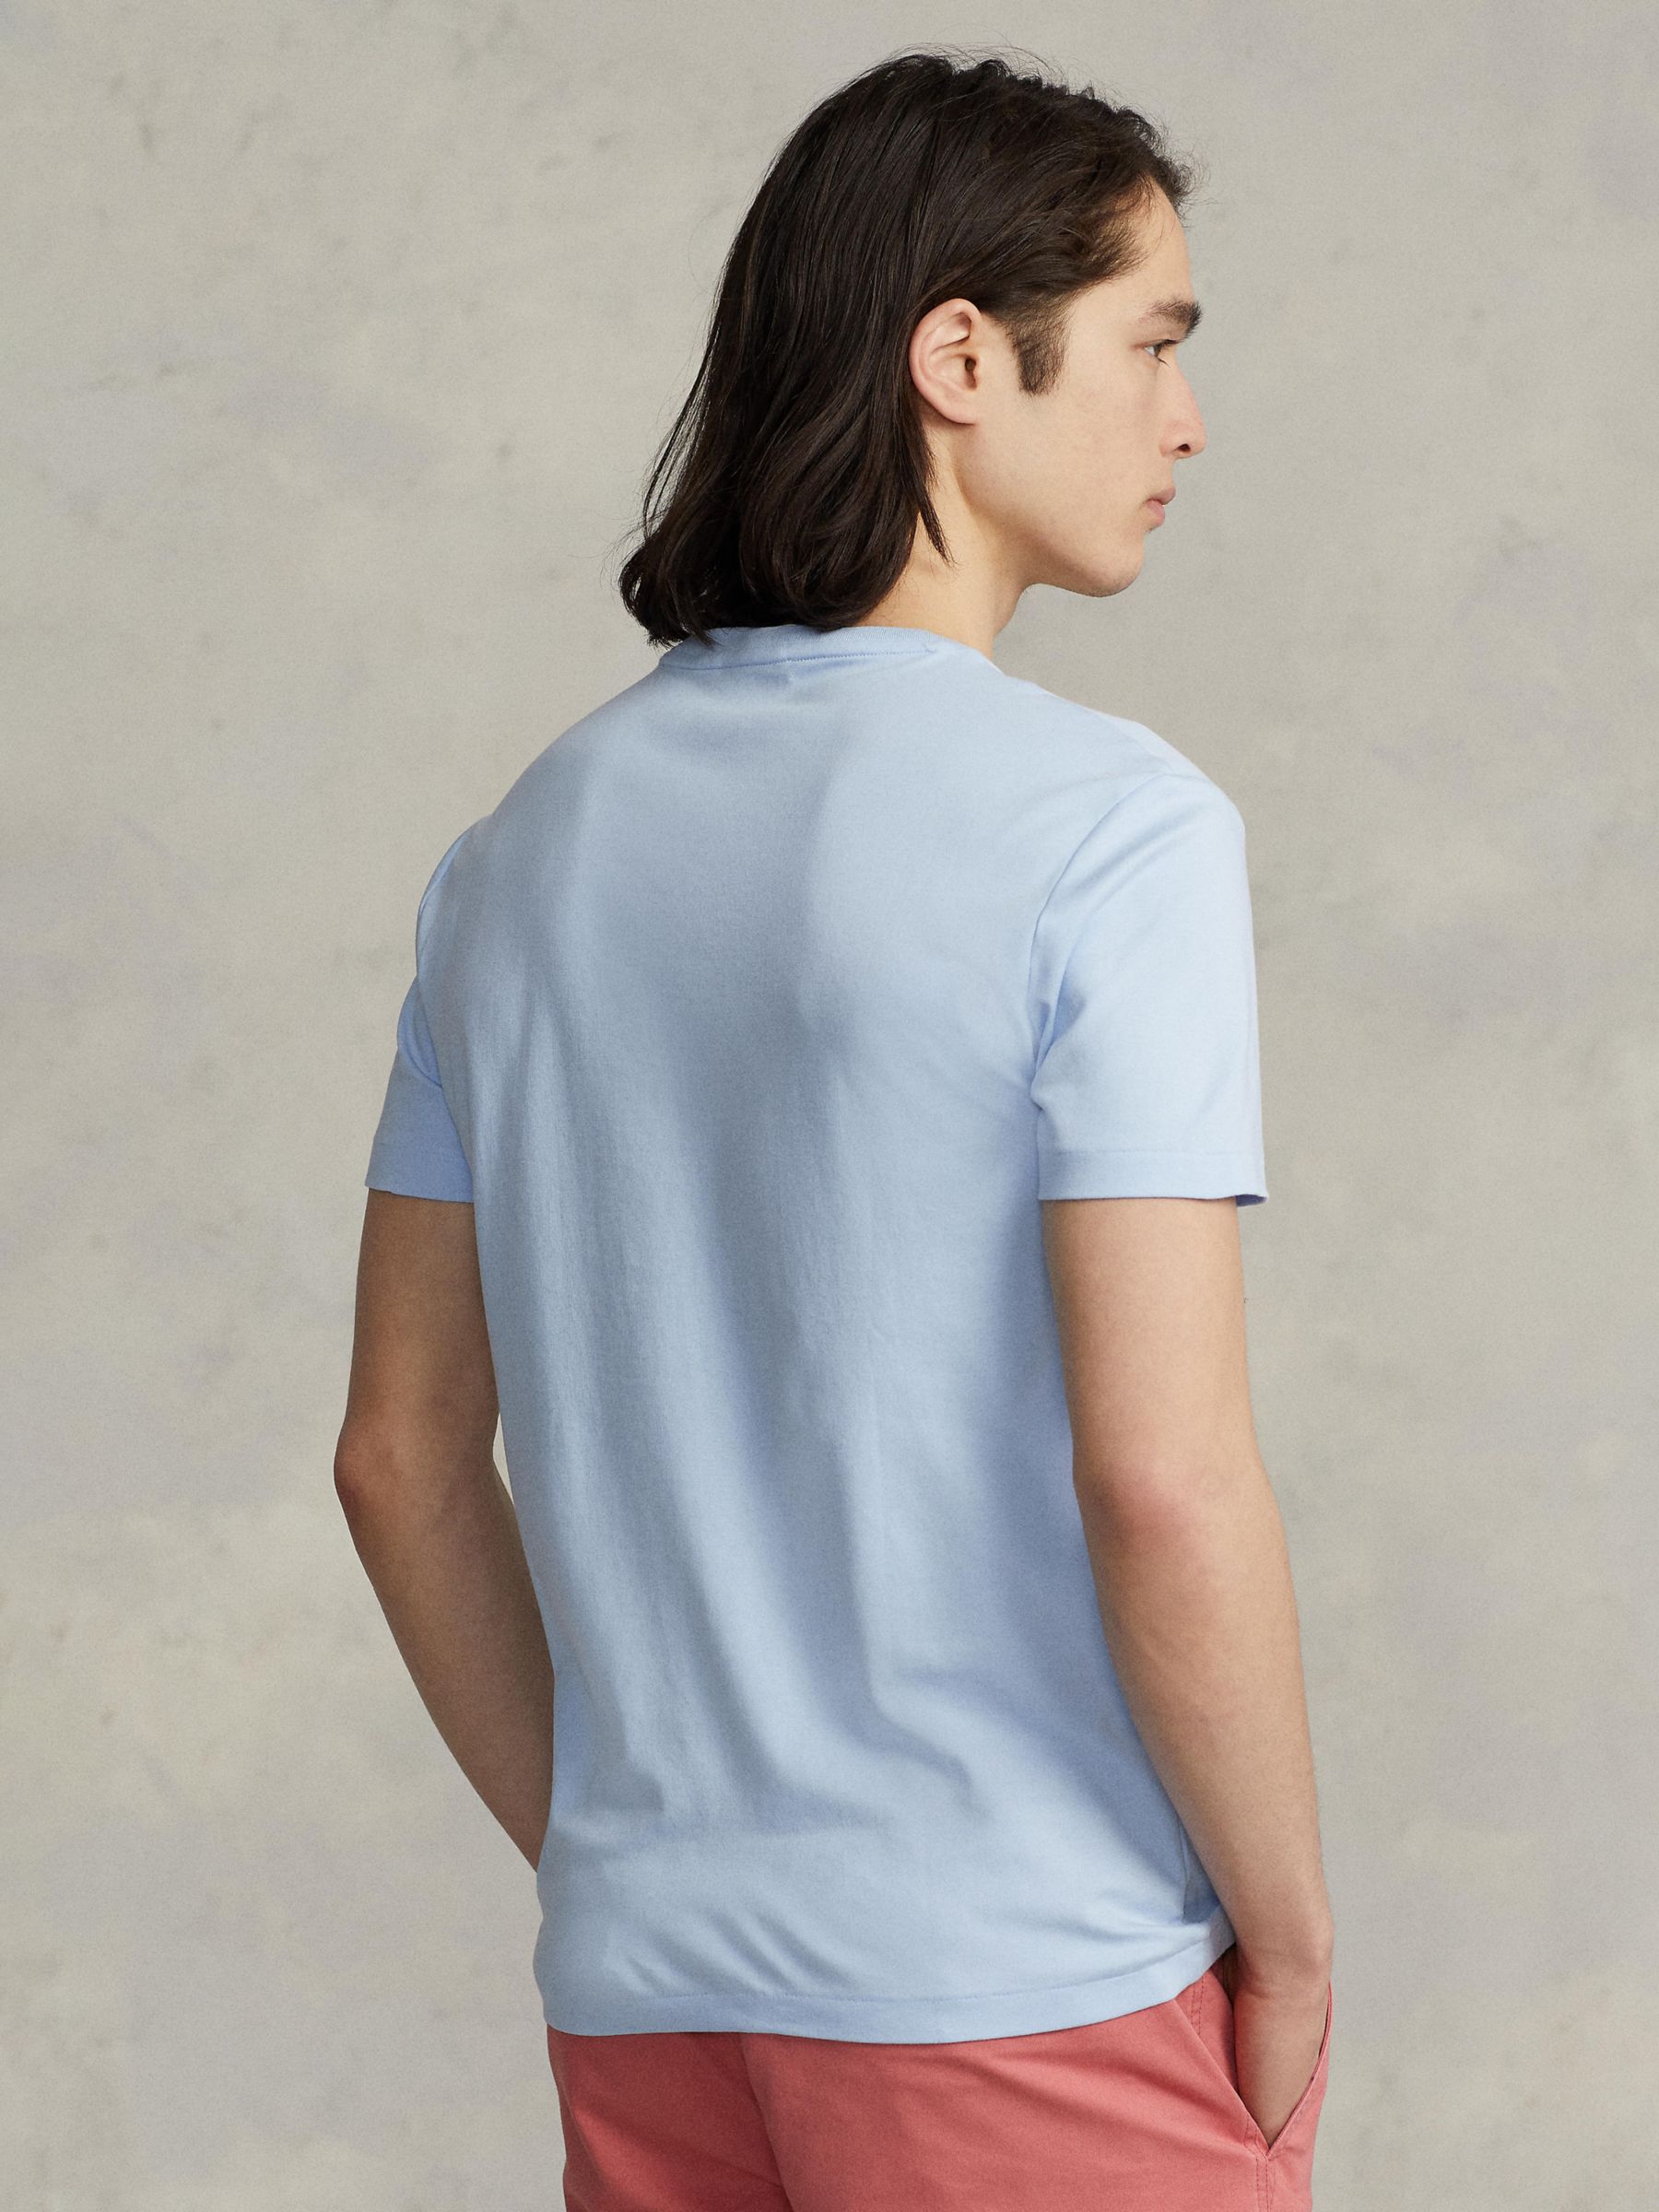 Ralph Lauren Slim Fit Soft Cotton T-Shirt, Office Blue, S